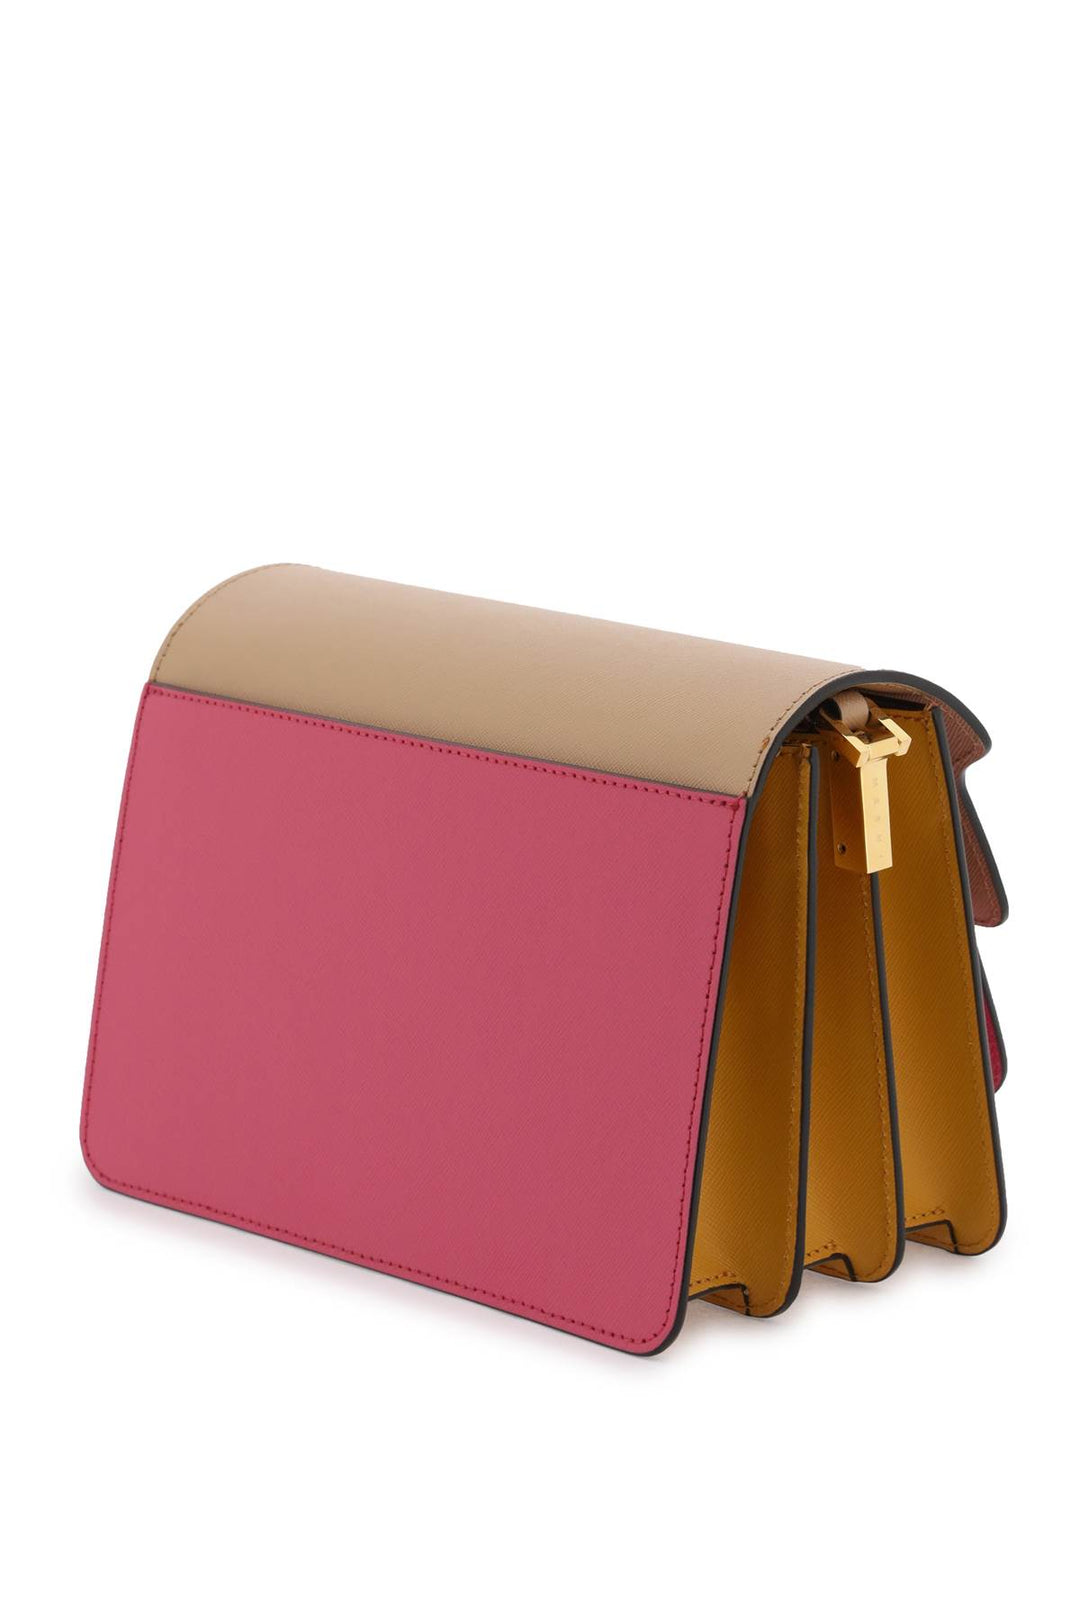 Marni Tricolor Leather Medium Trunk Bag   Beige